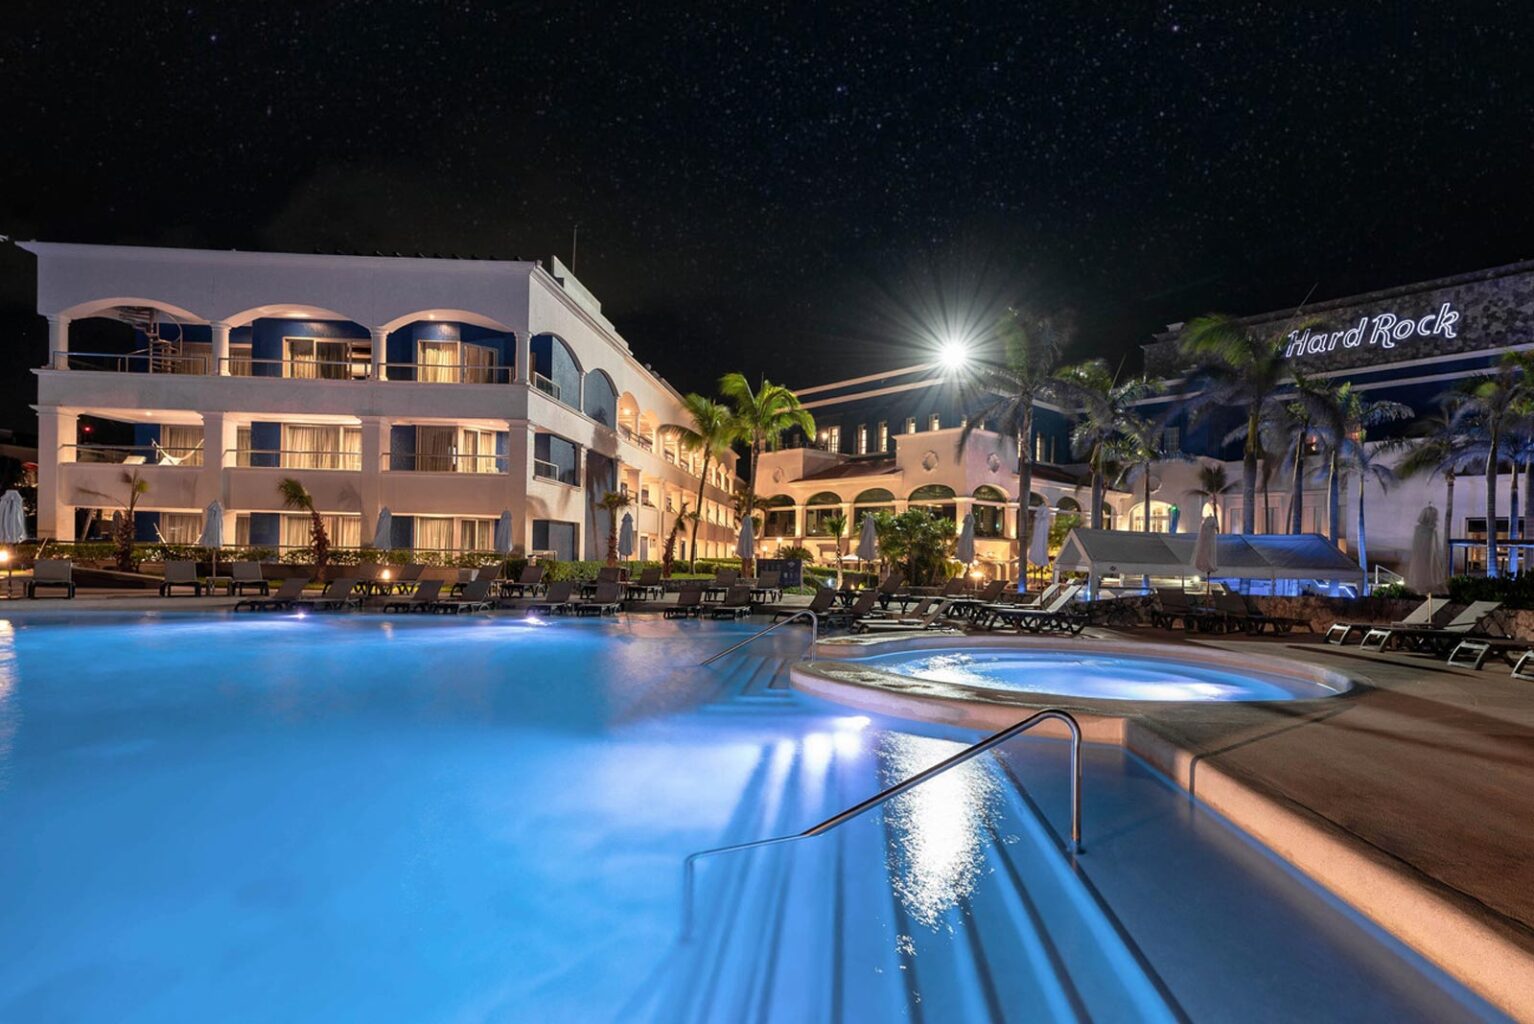 Hard Rock Hotel Riviera Maya Heaven Pool at night